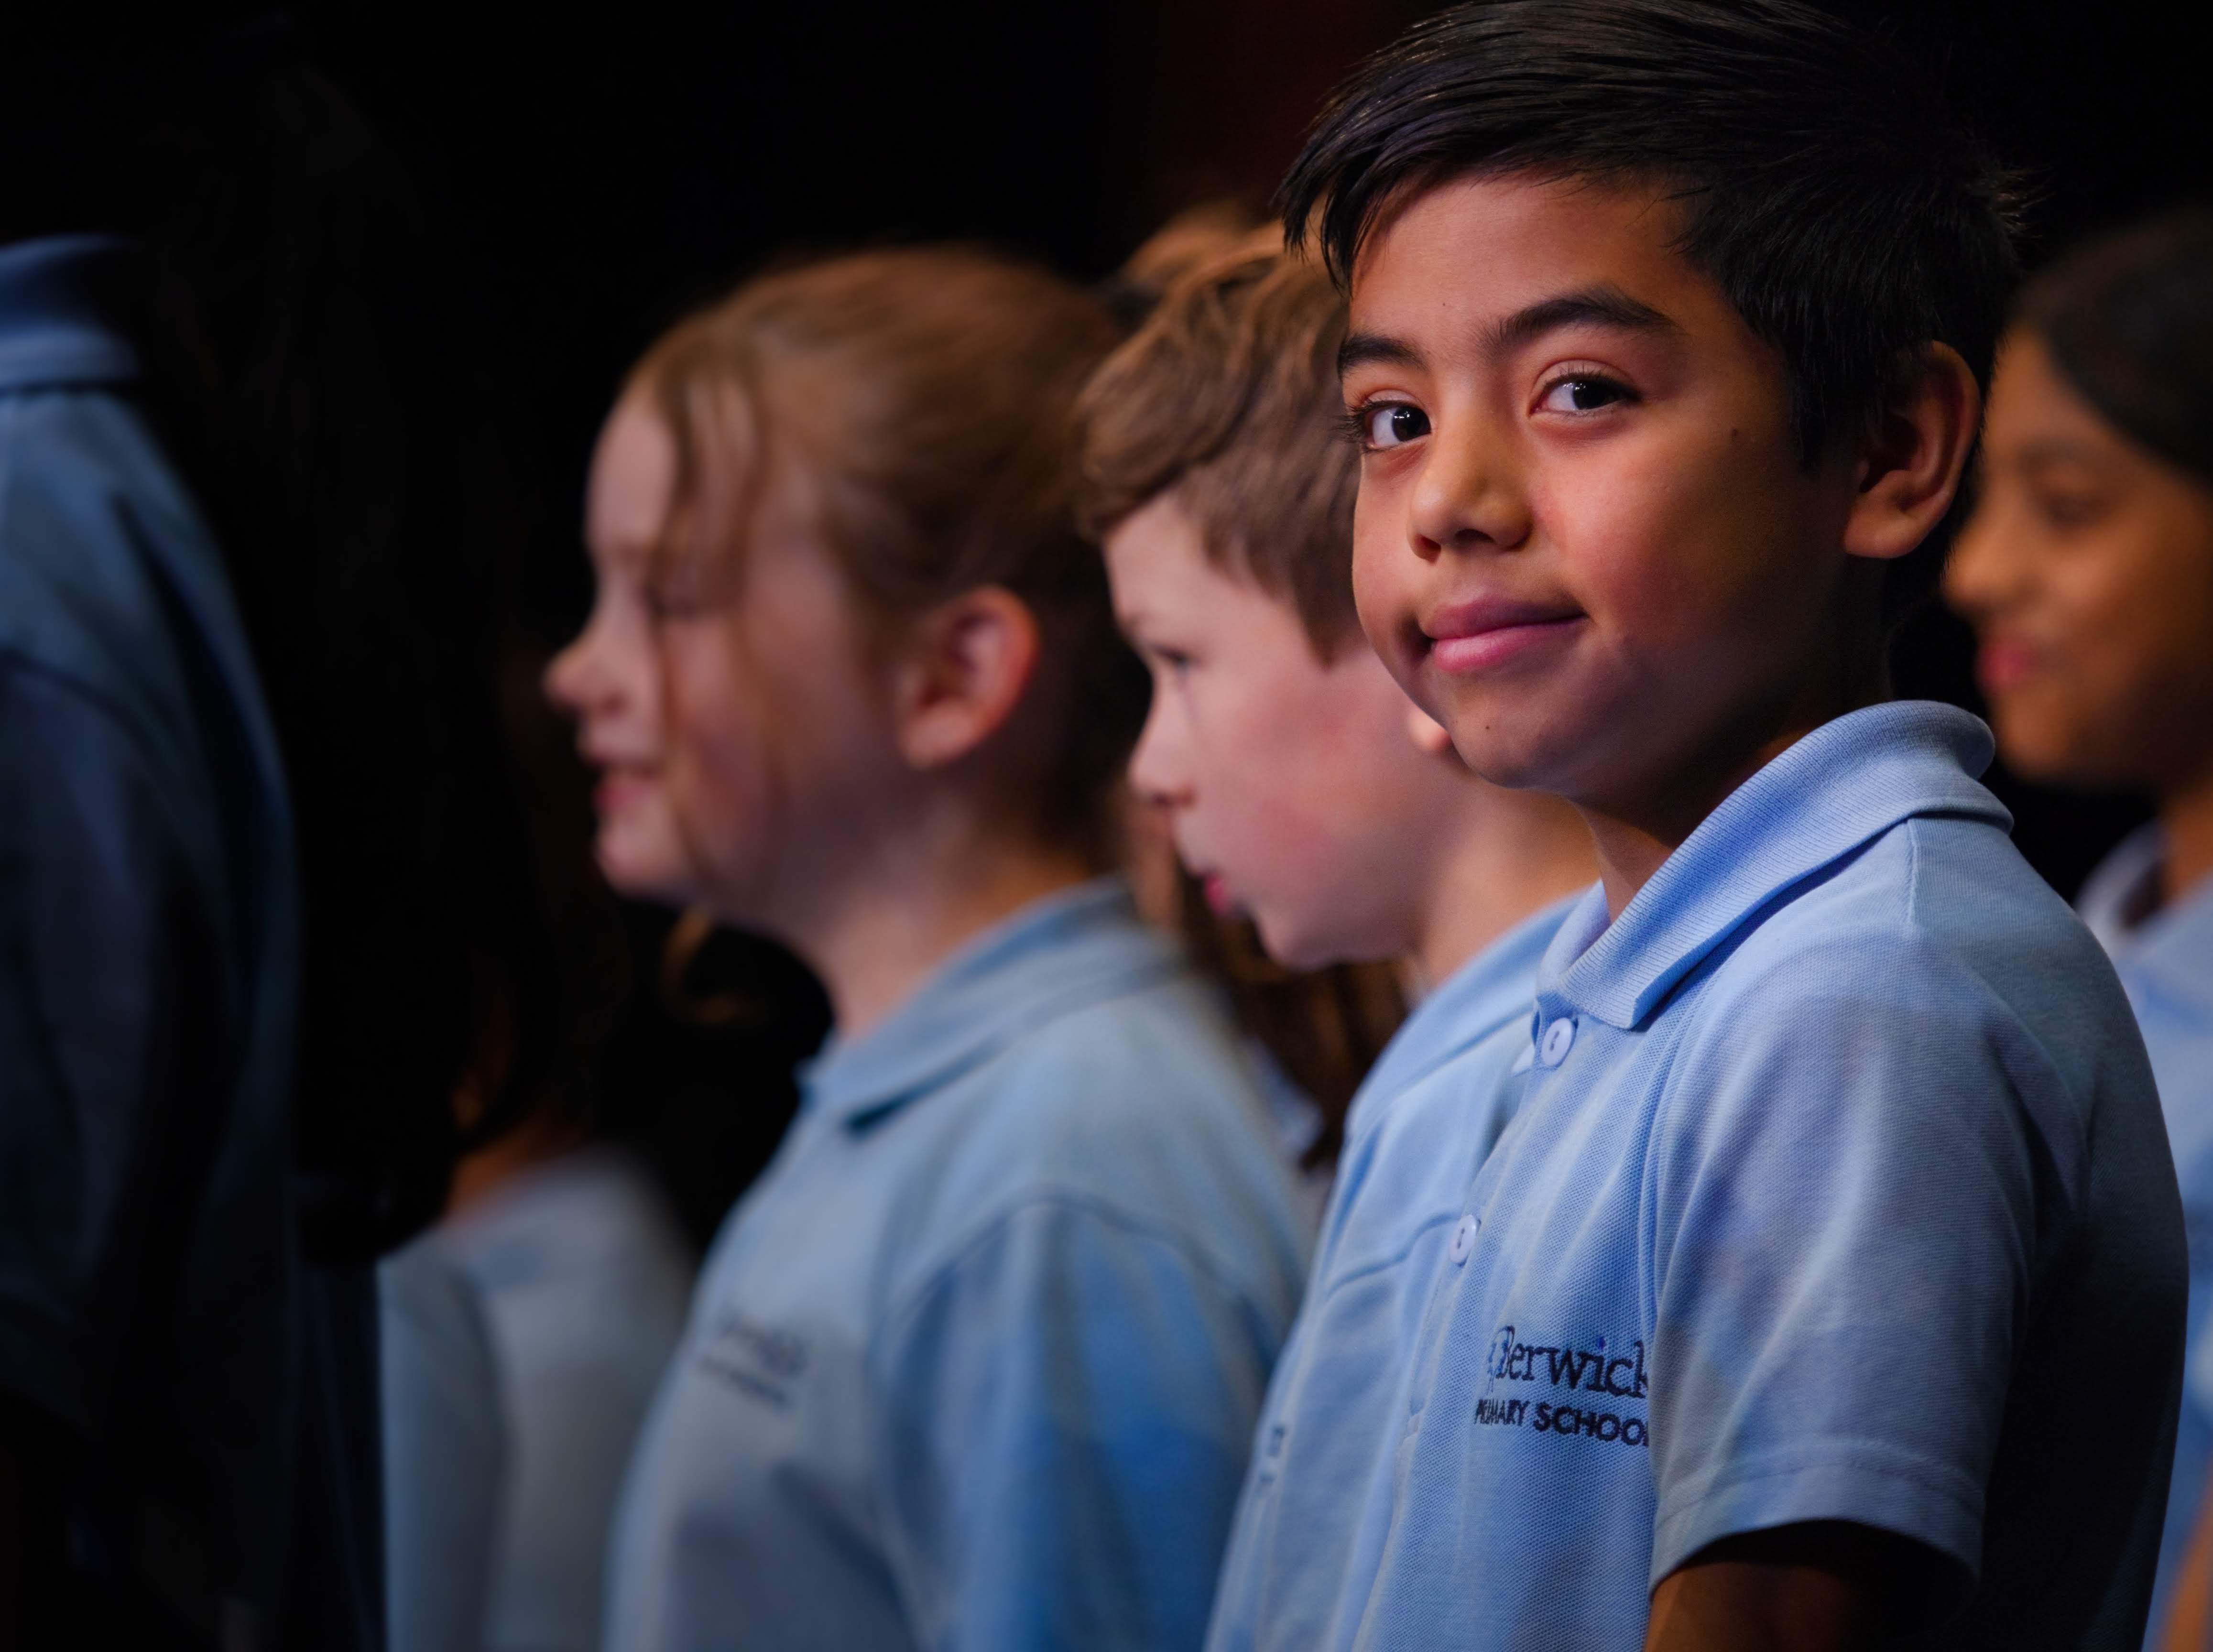 WGE Choral Berwick Primary School Grade 4 Choir Perform